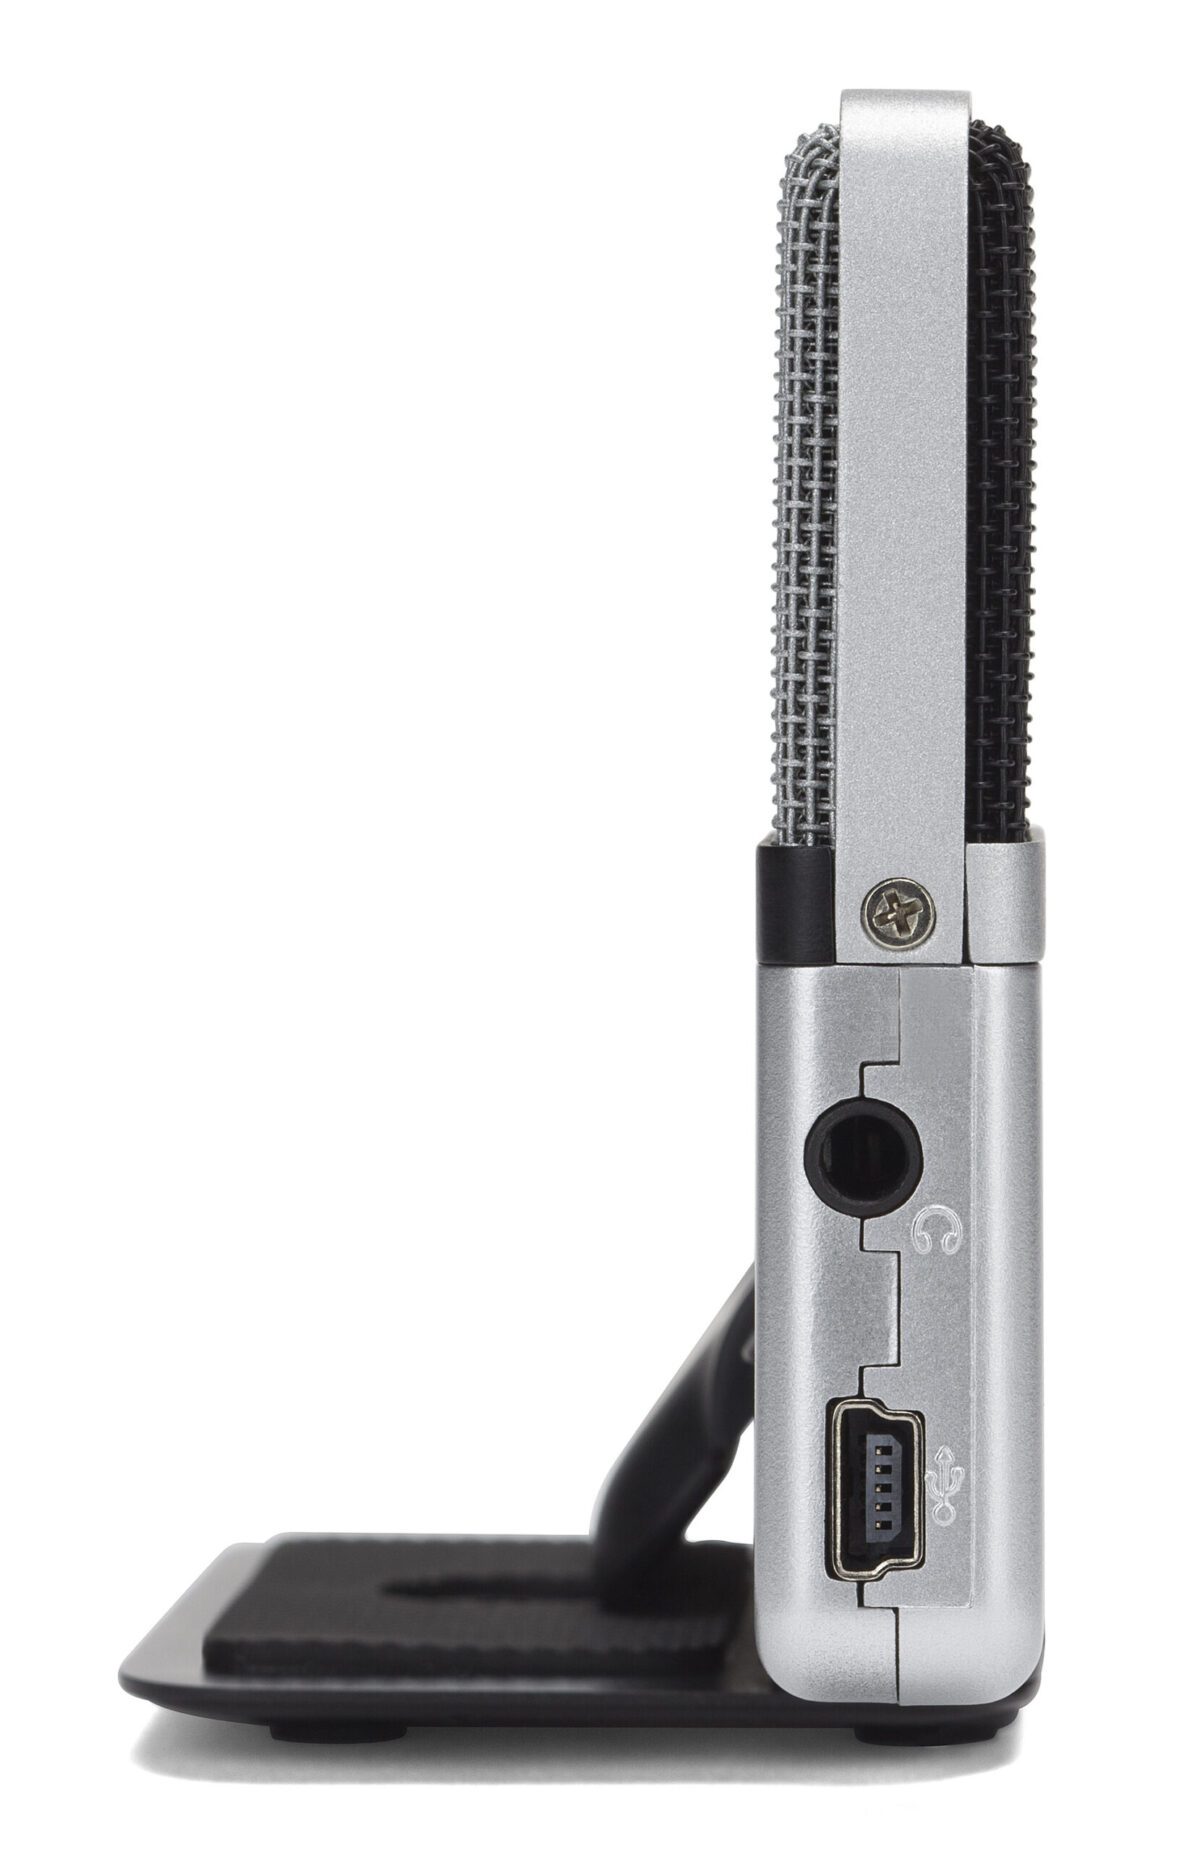 Samson Go Mic - Portable USB Condenser Microphone